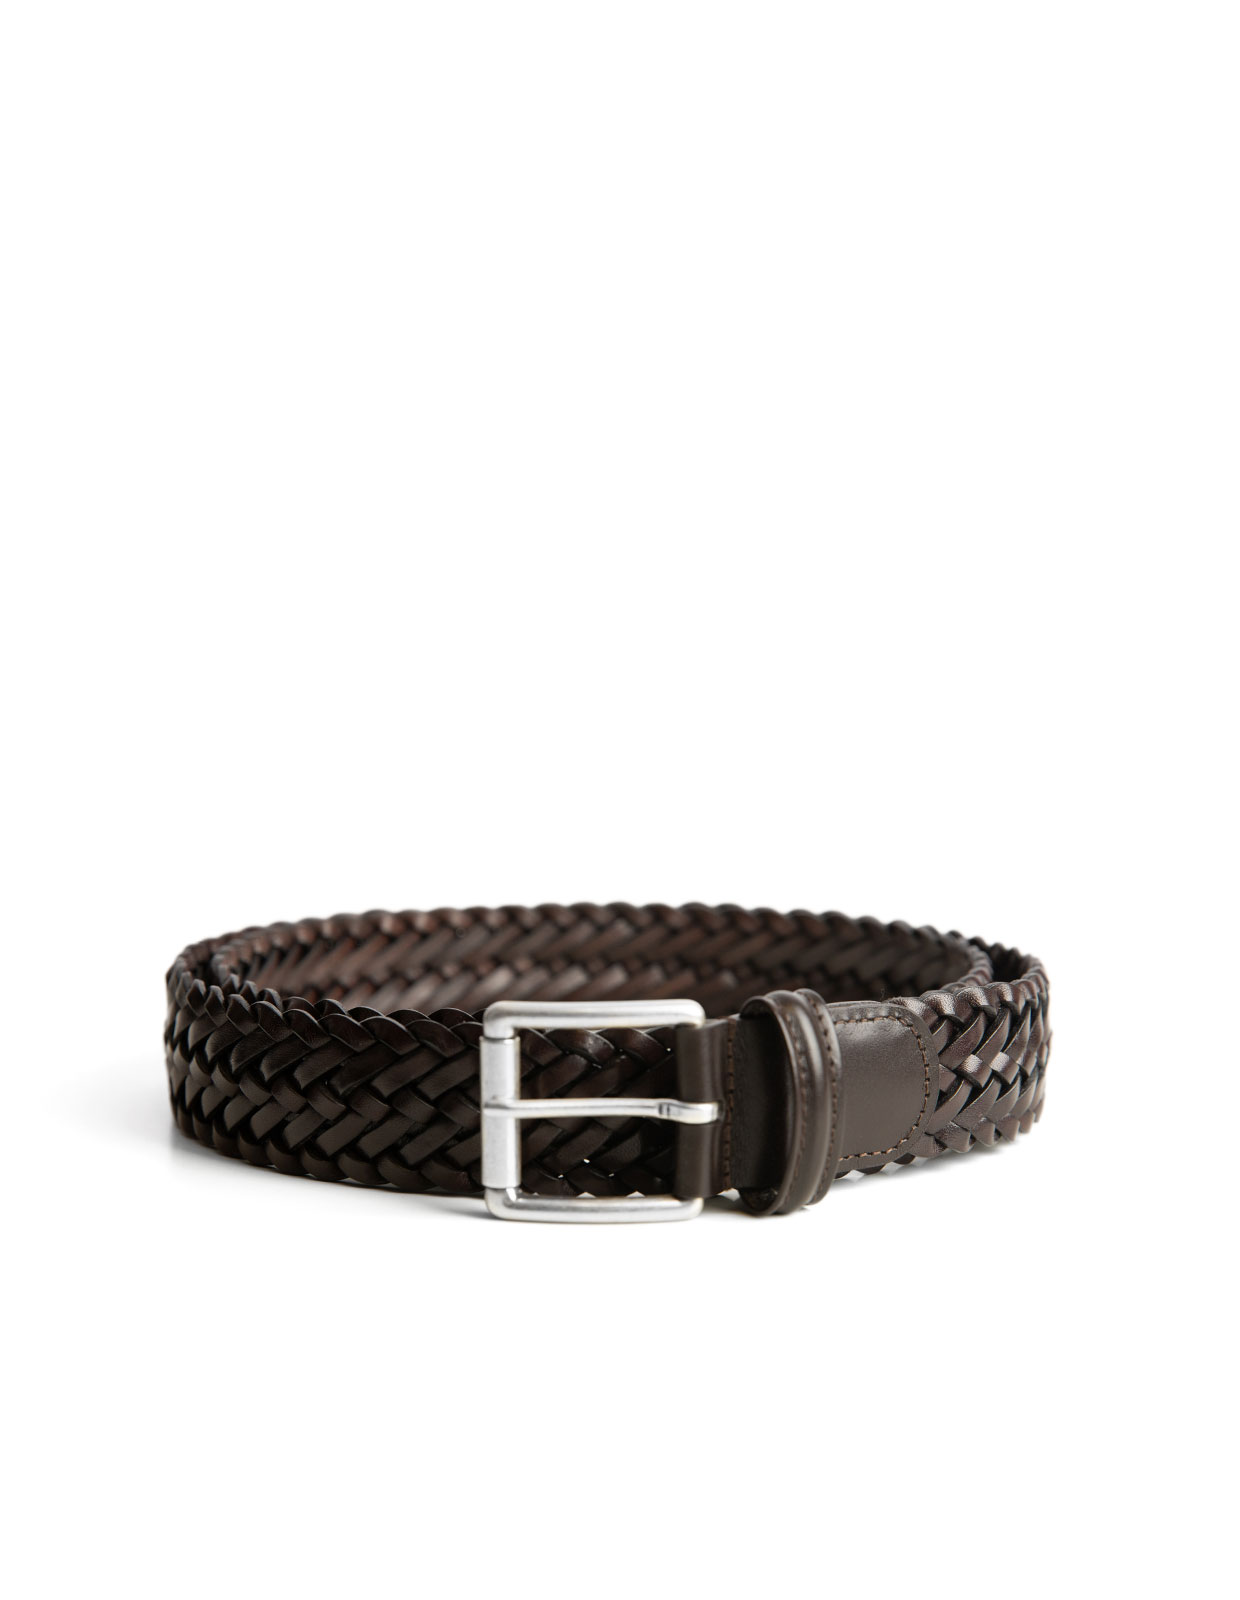 Braided Leather Belt Brown Stl 85